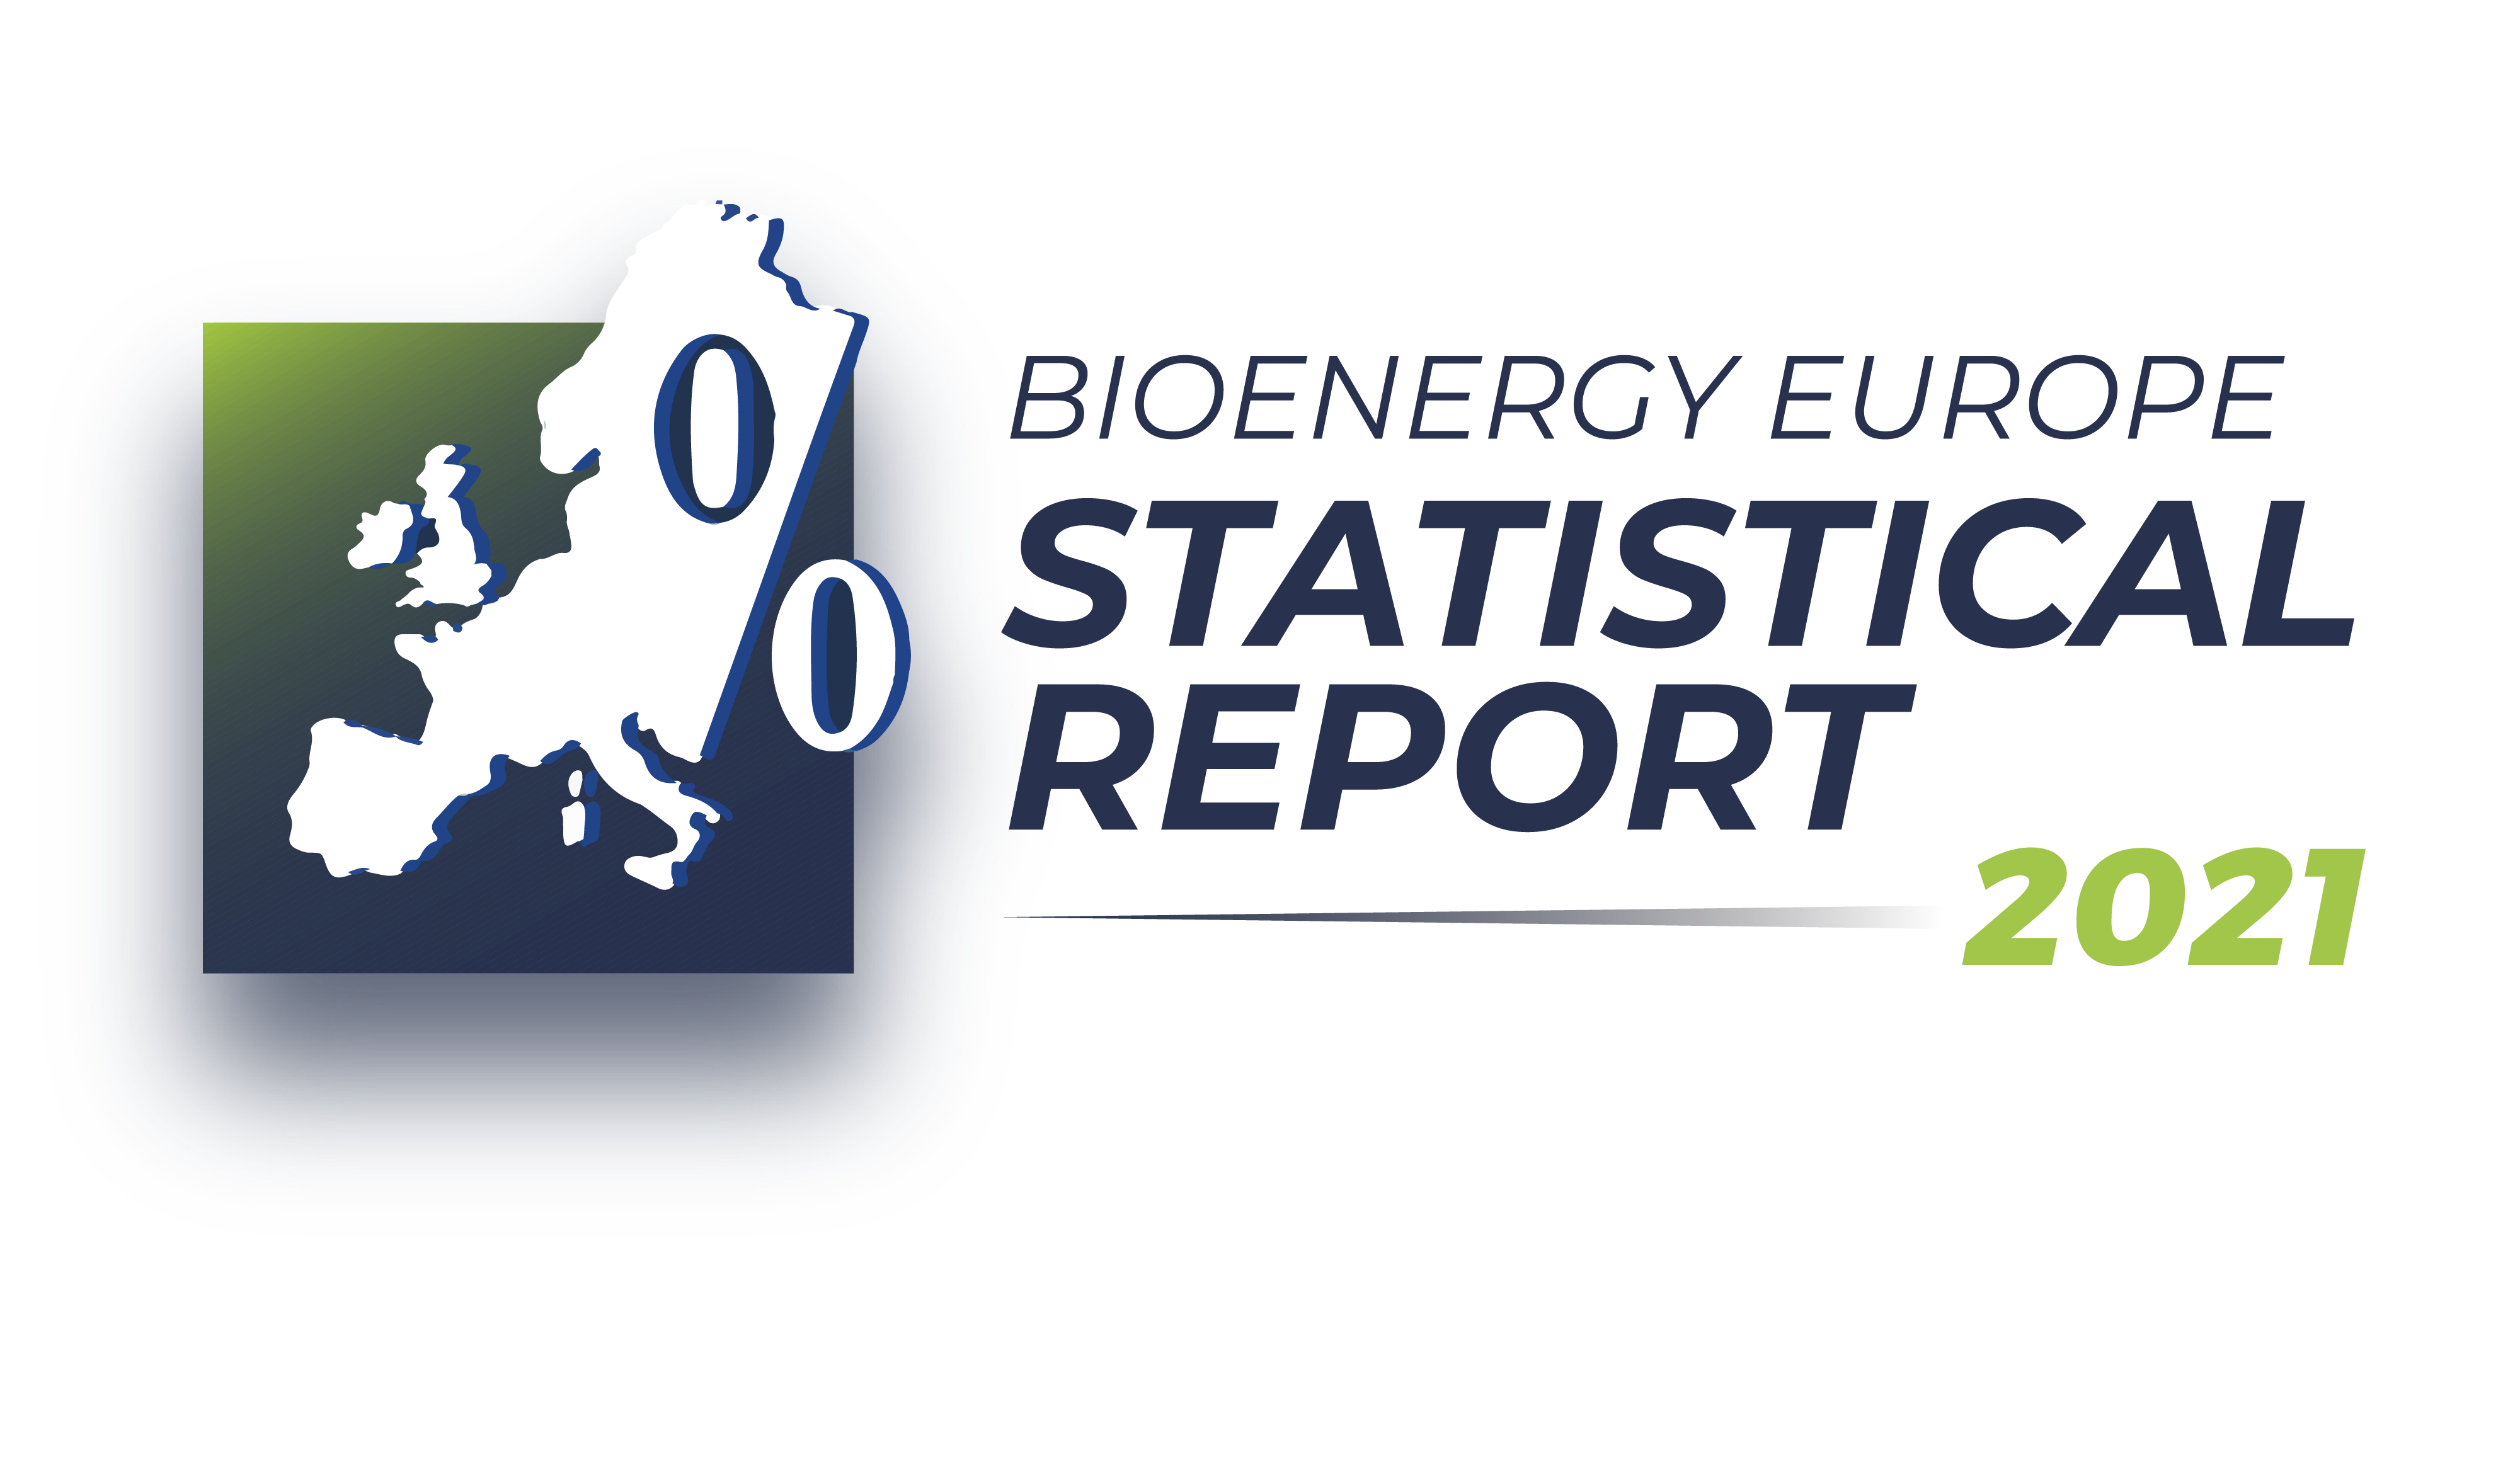 Bioelectricity - Bioenergy Europe